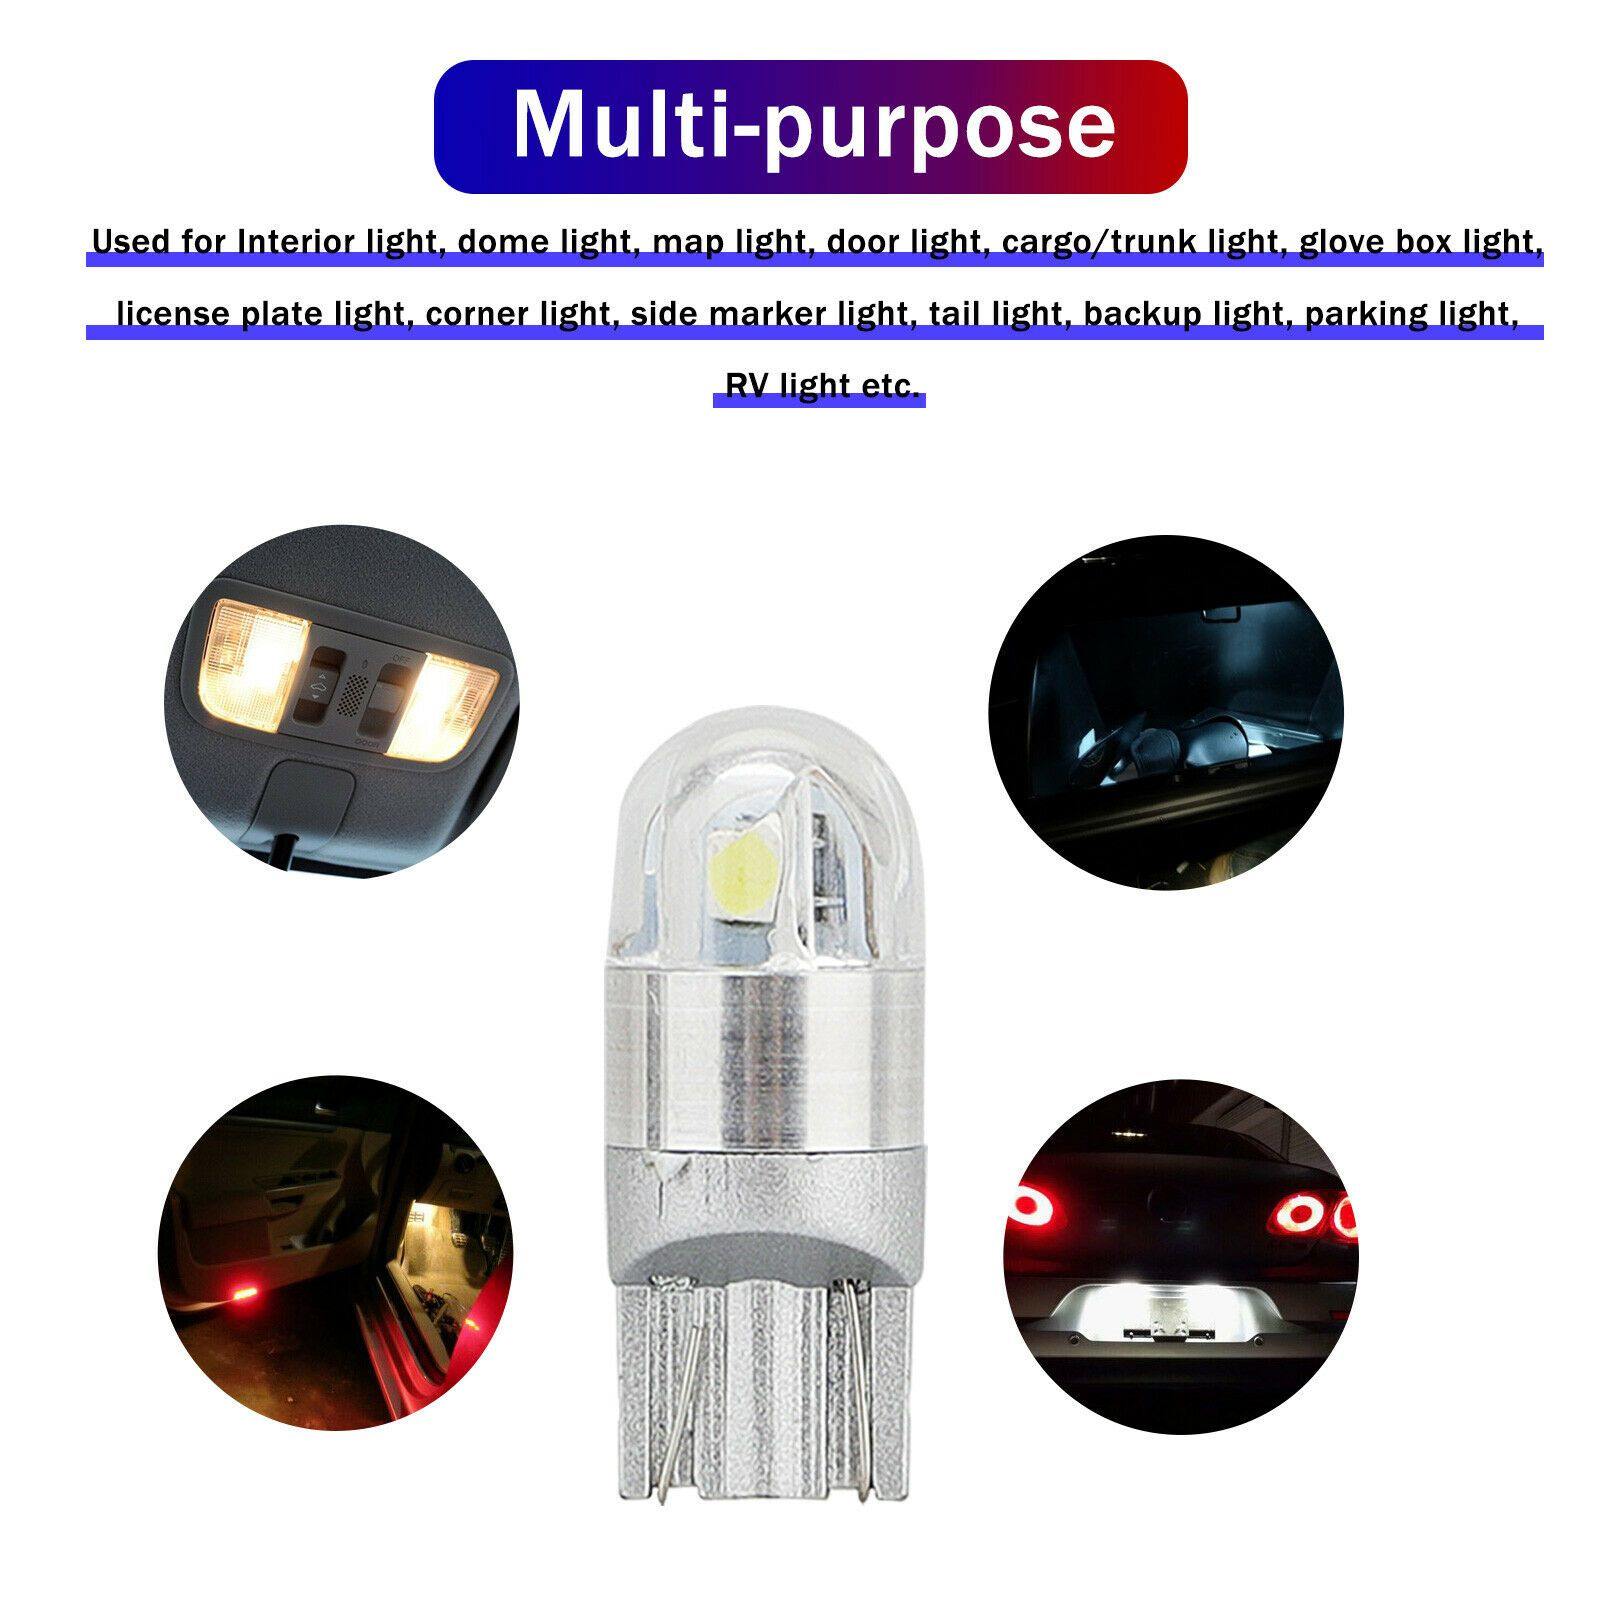 10PCS LED T10 194 168 W5W Canbus 4 Colors Dome License Side Marker Light Bulb 6000K - KinglyDay